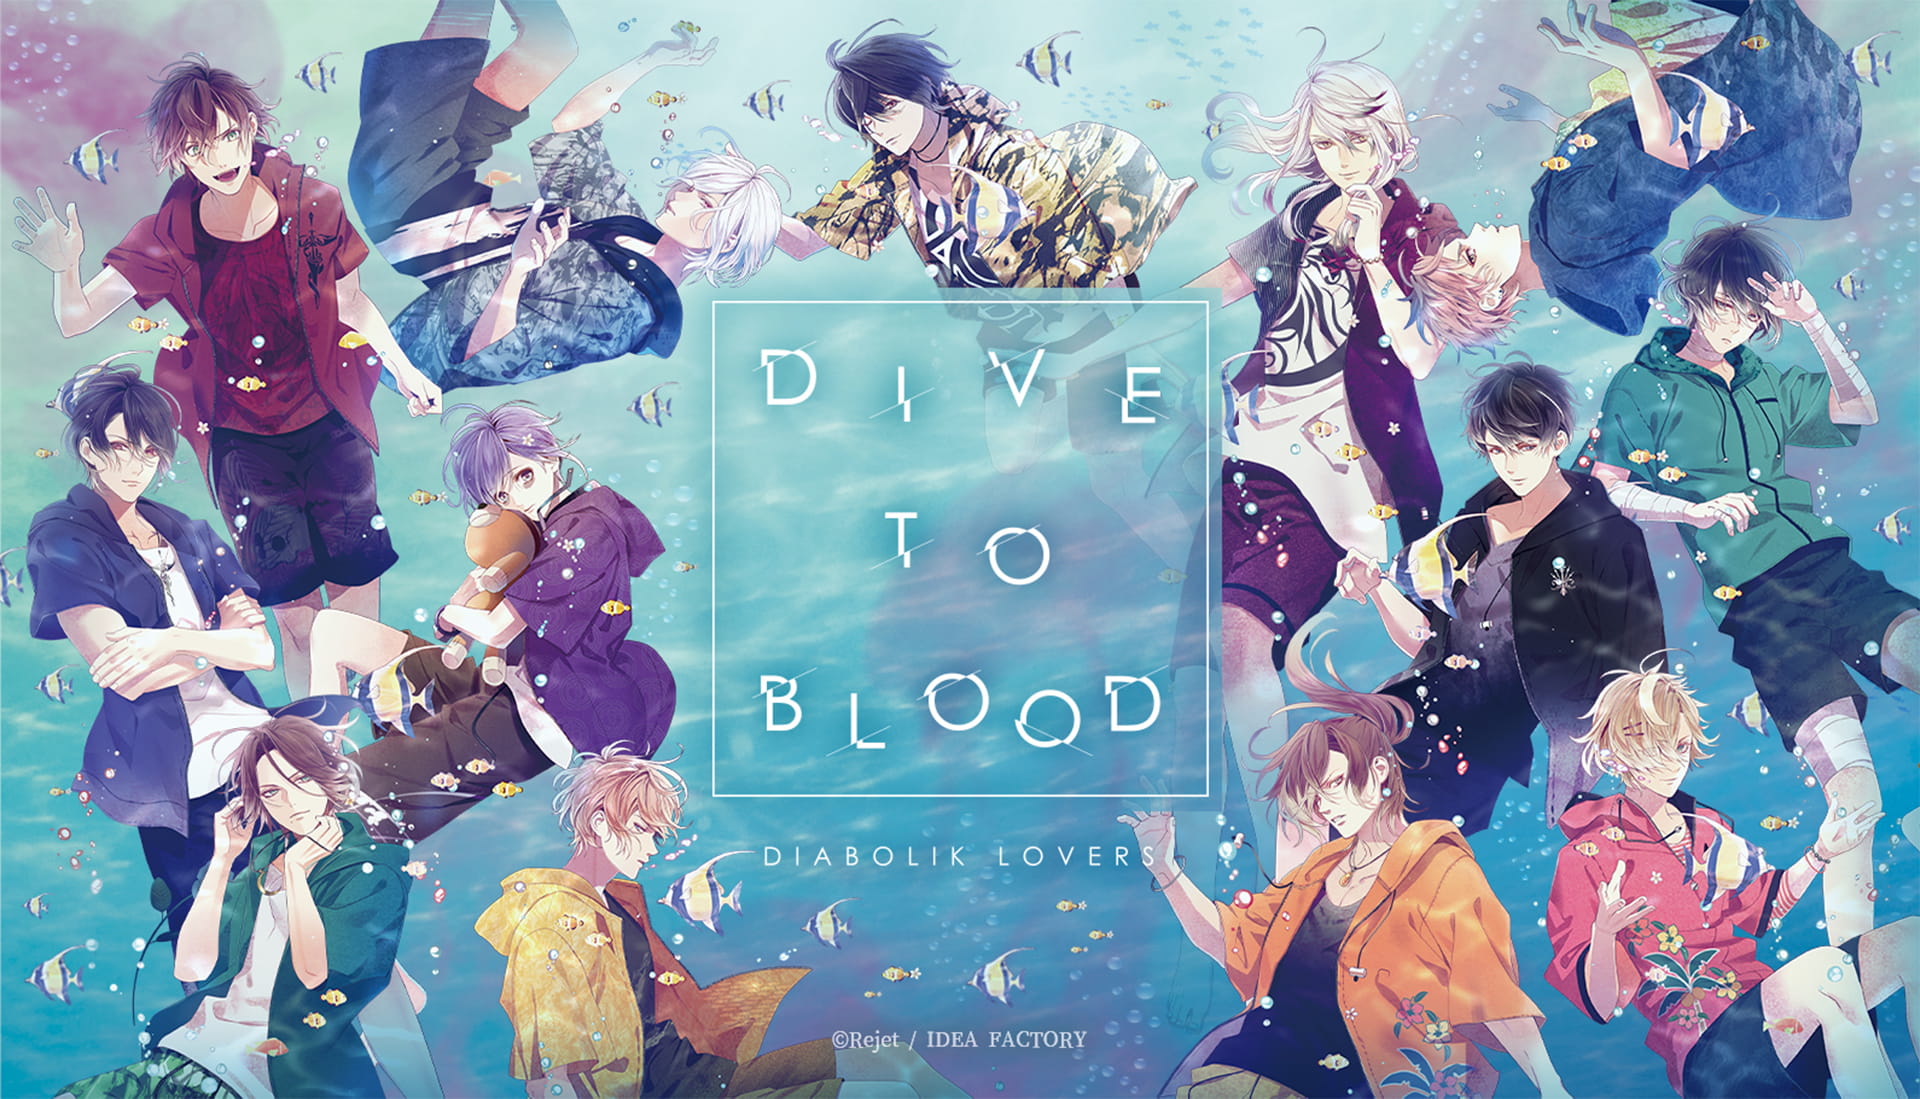 Dive to blood Diabolik lovers ©Rejet / Idea Factory